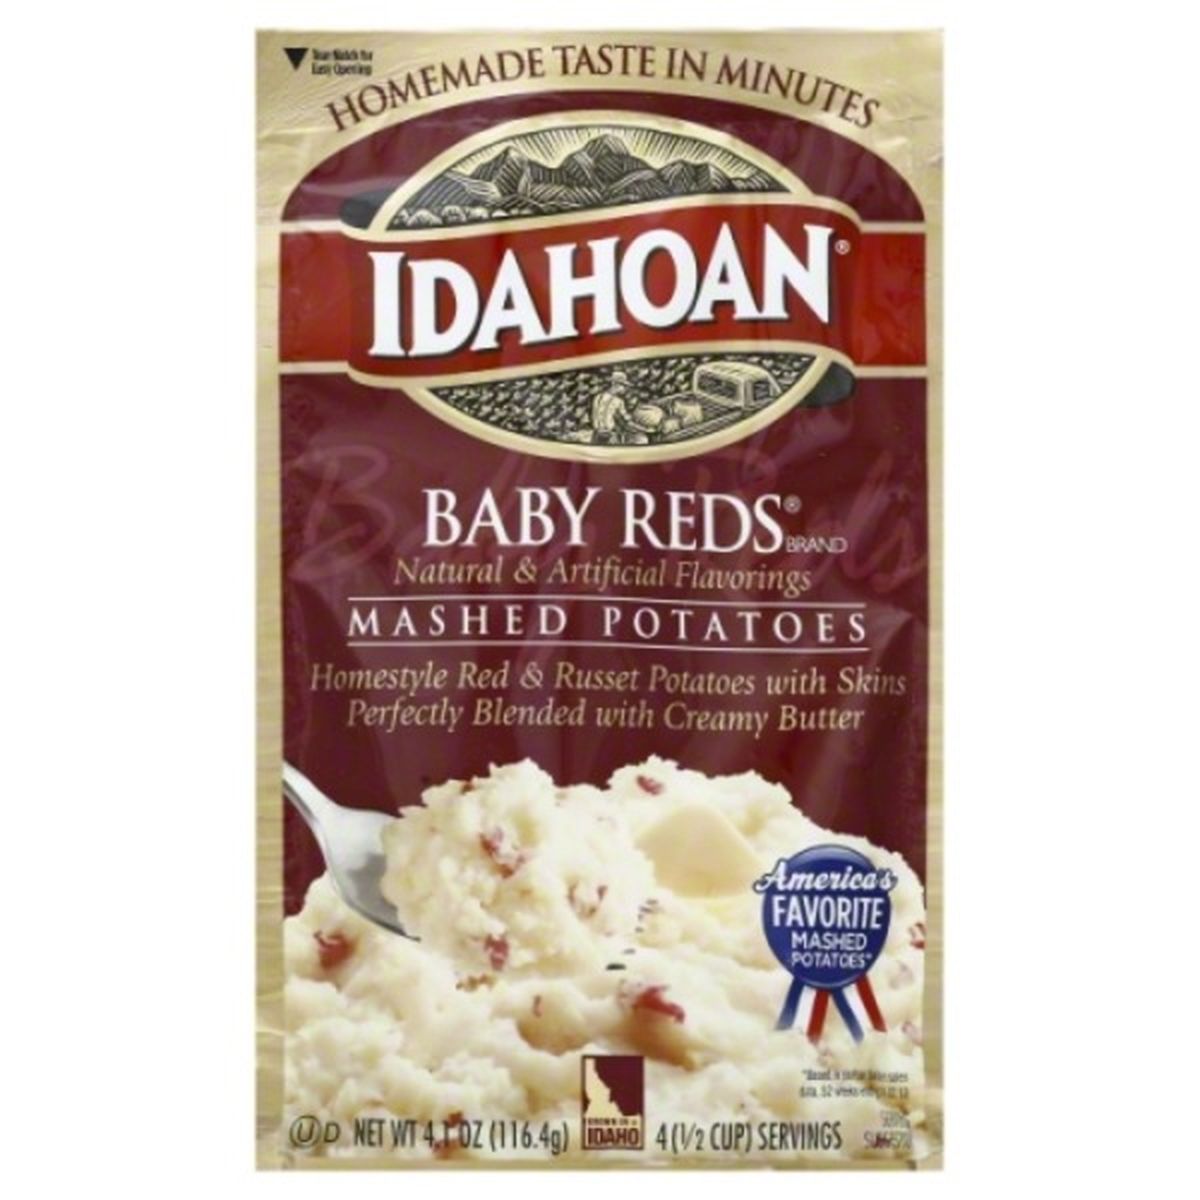 Calories in Idahoan Mashed Potatoes, Baby Reds